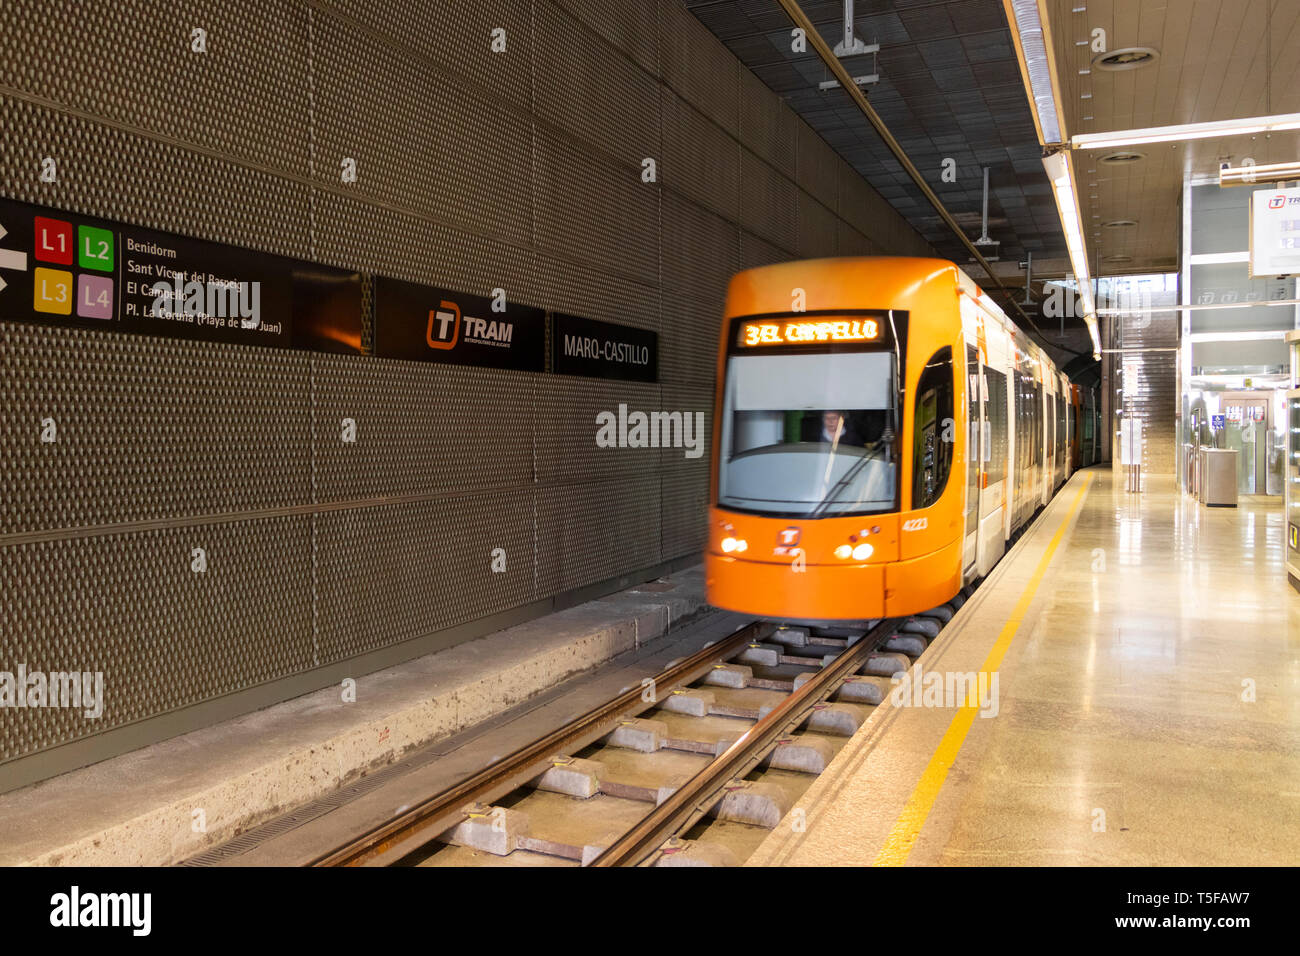 orange El Campello bound metro train speeds into Marq - Castillo rapid  transit rail station in Alicante spain Stock Photo - Alamy